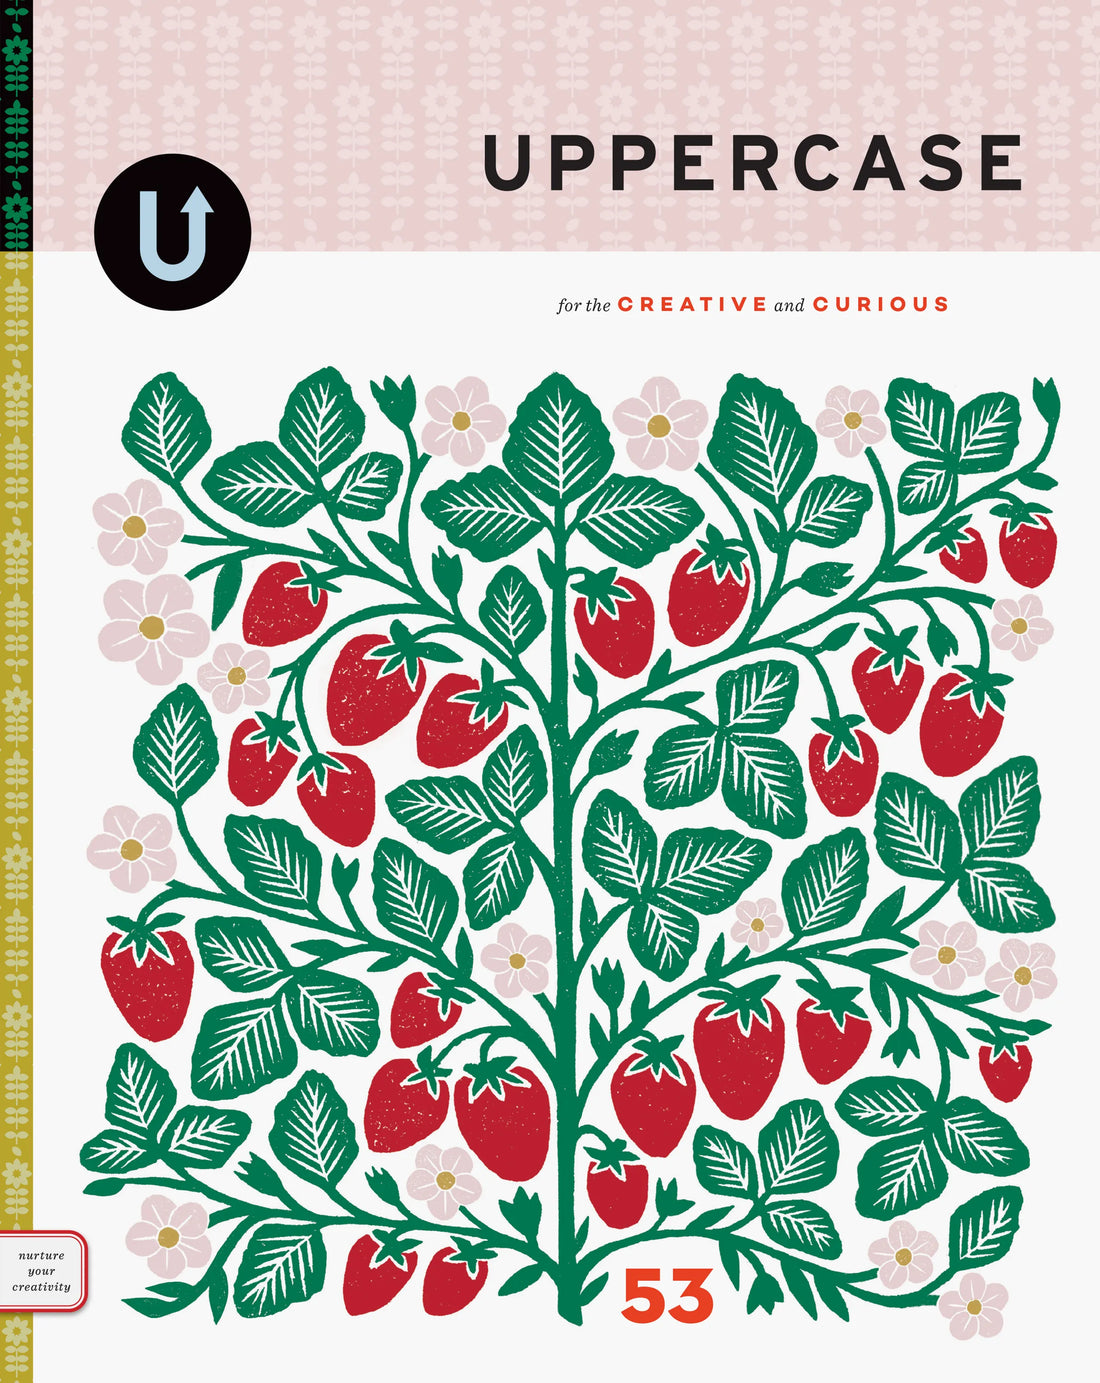 Uppercase magazine, Issue 53